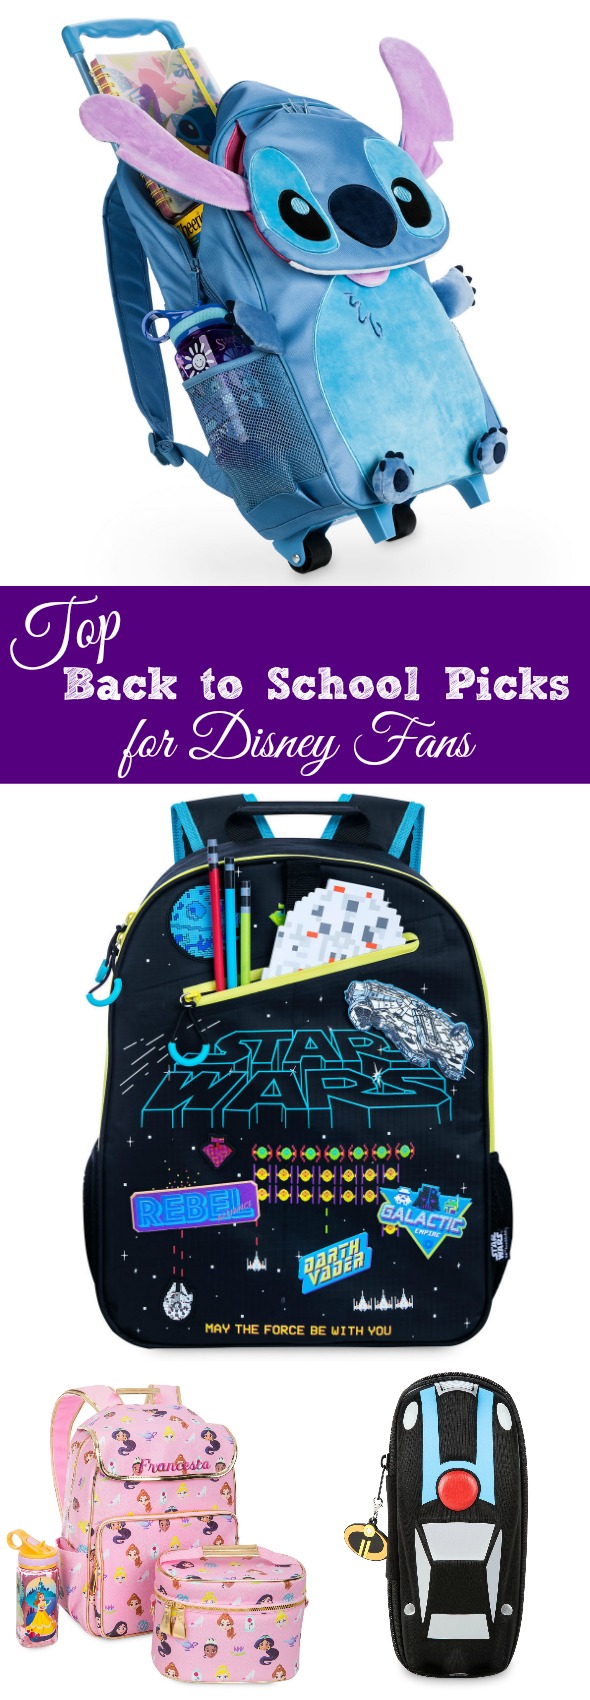 Top Back to School Picks for Disney Fans #affiliate #ad #disney #backtoschool #schoolshopping #shopdisney #backpack #lunchbox #lunchtote #pencilcase #starwars #superhero #incredibles #stitch #ariel #princess #disneyprincess